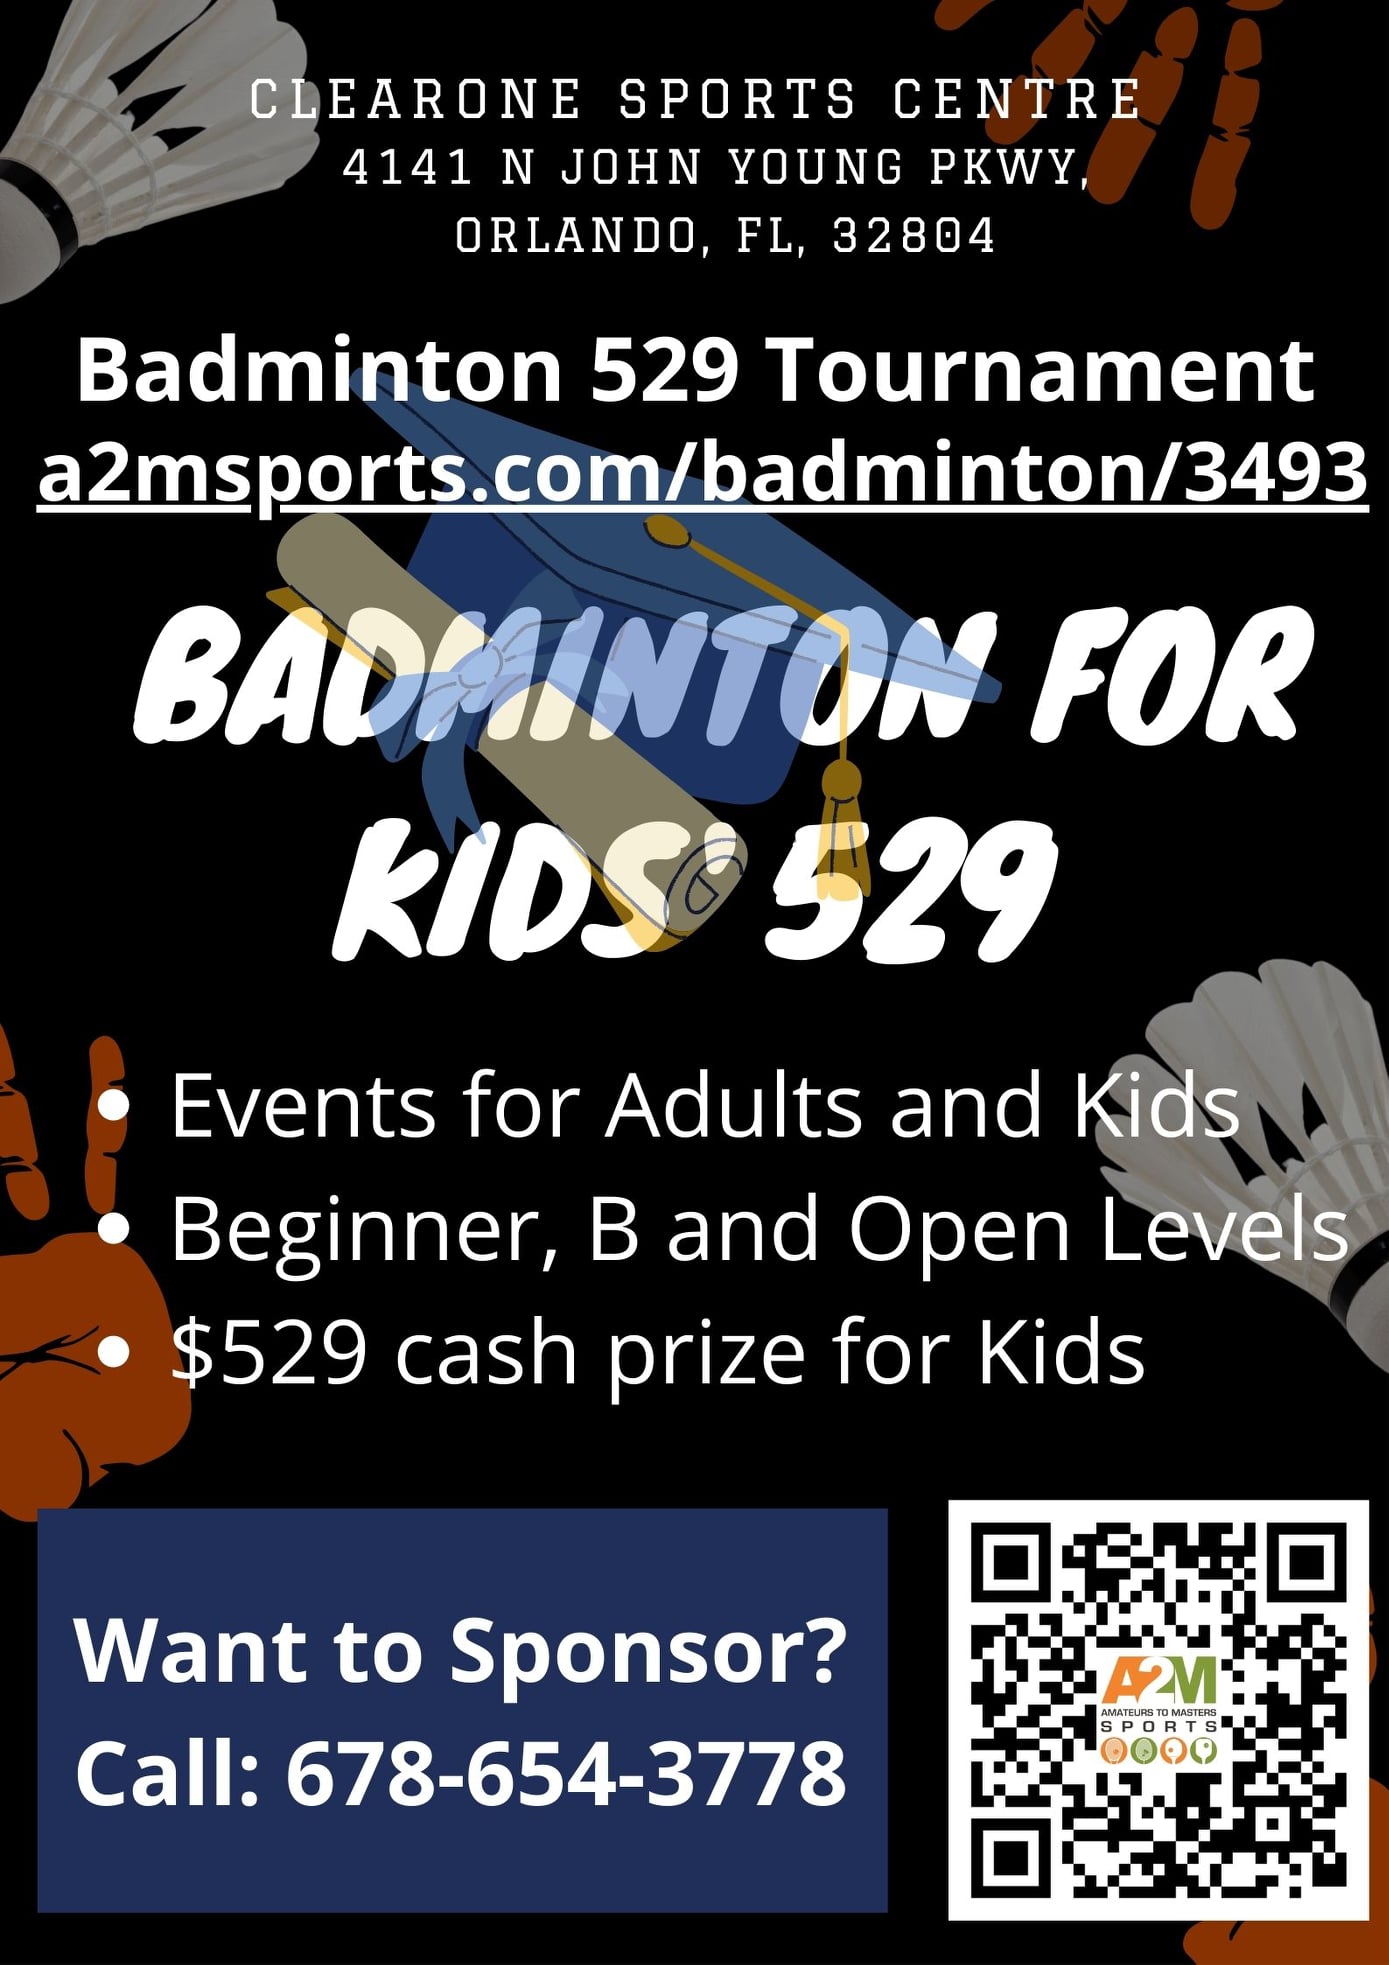 Badminton for Kids